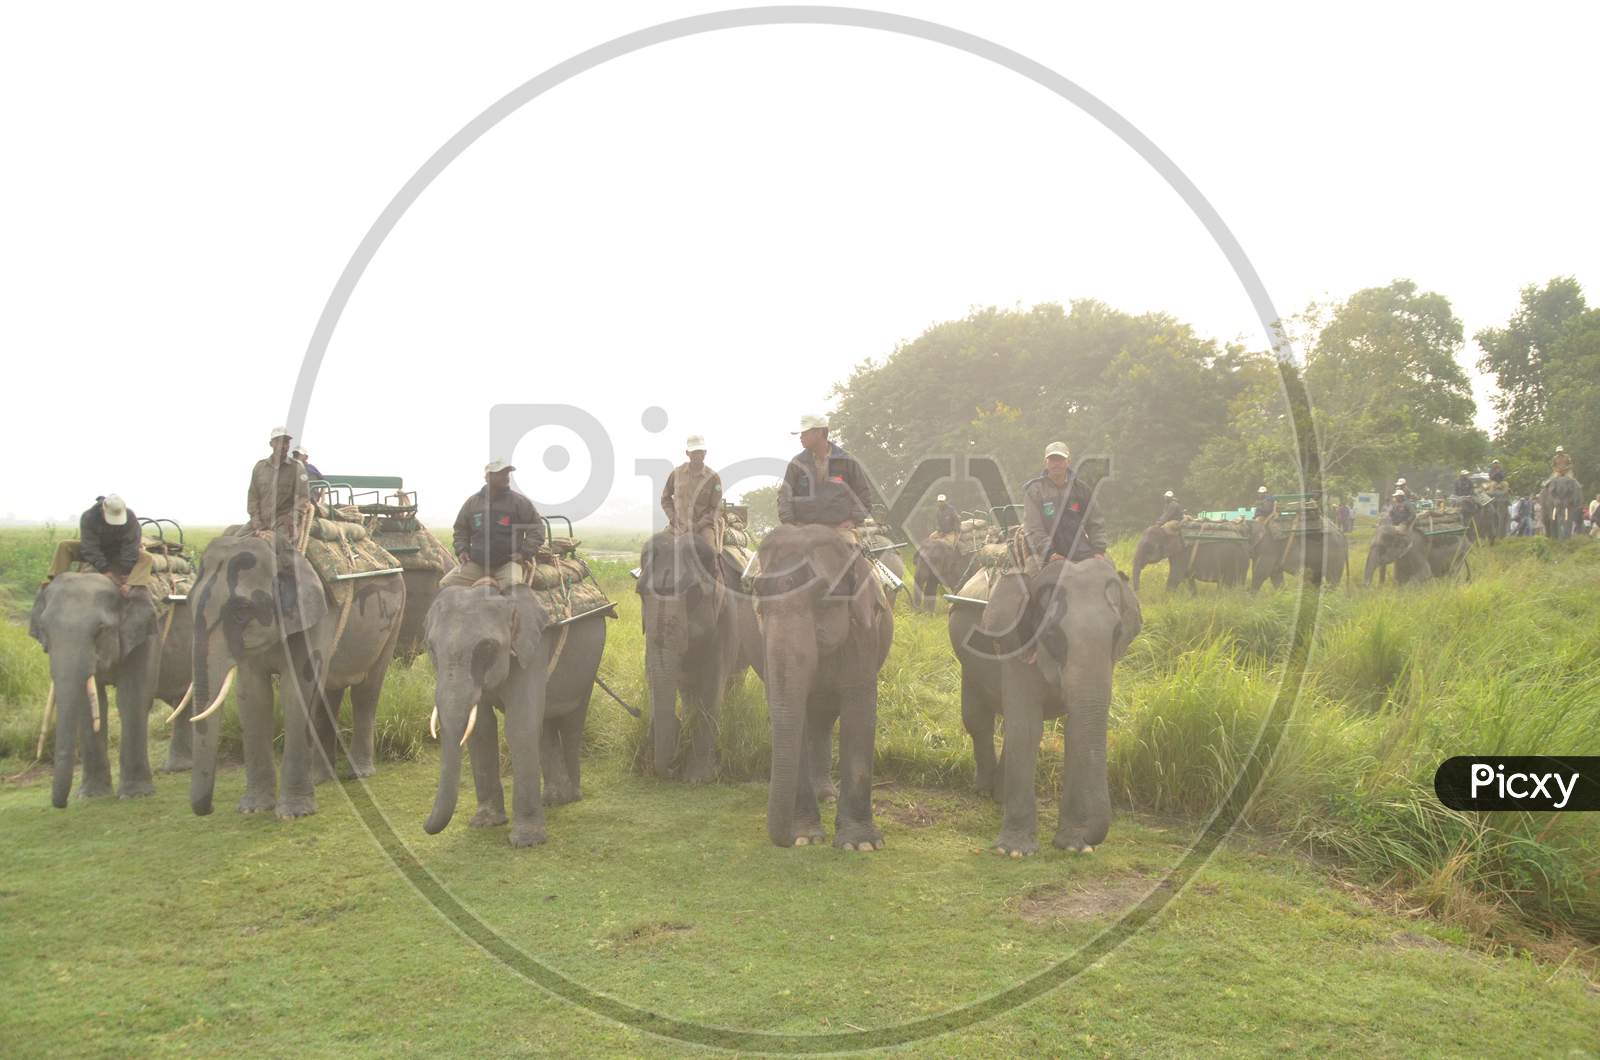 Elephant Safari in Kaziranga National Park, Assam